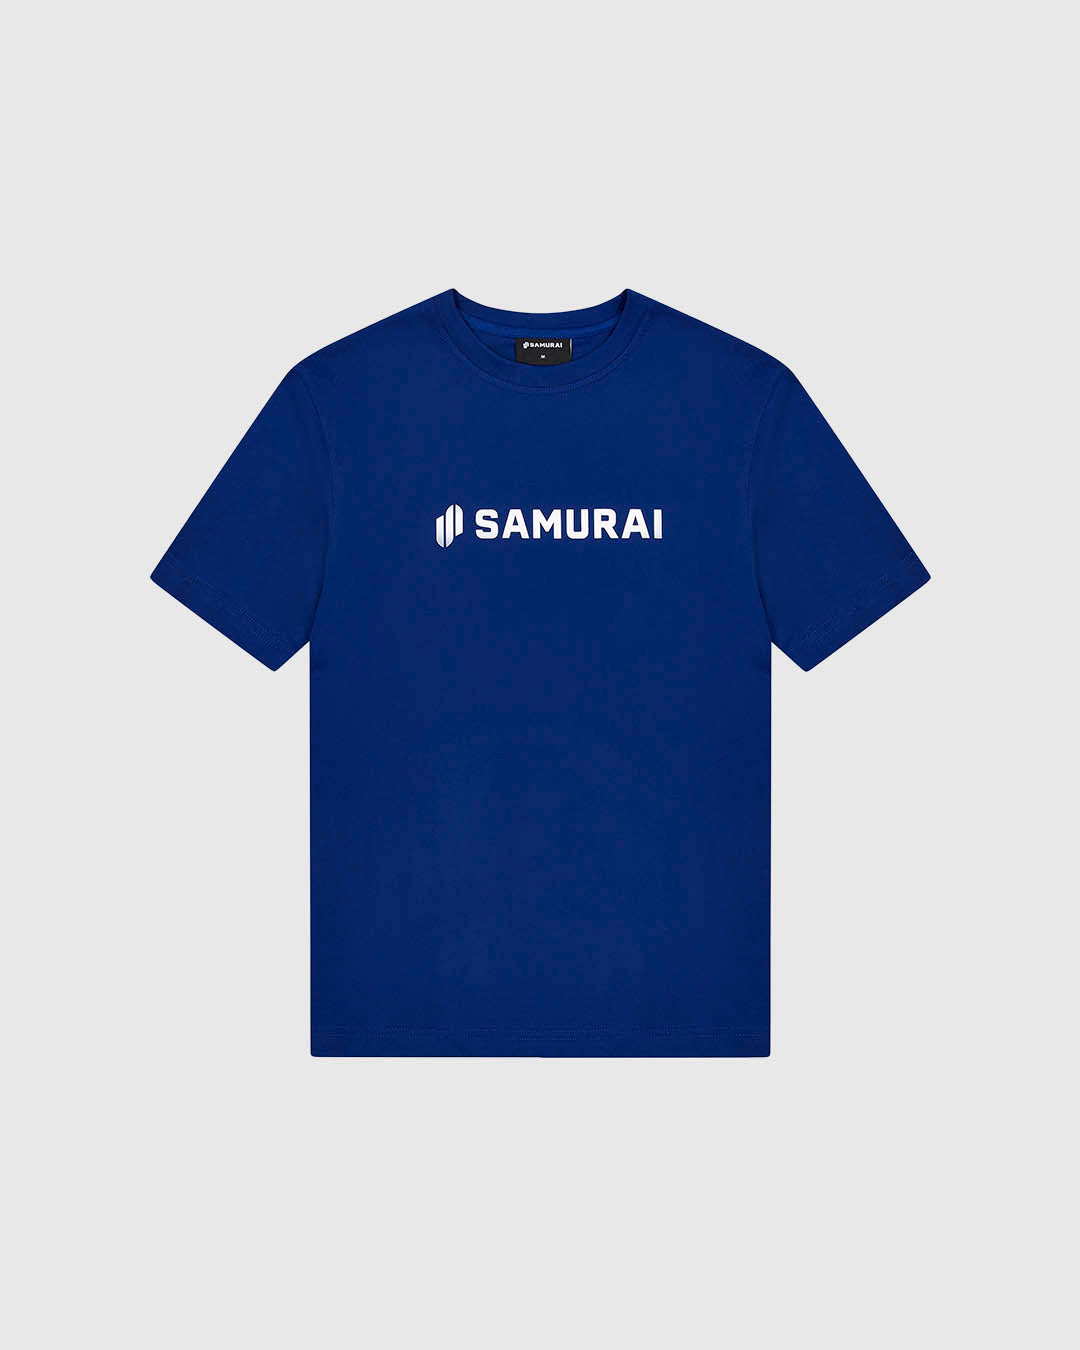 PFC: 003-1 - Women's T-shirt - Royal Blue